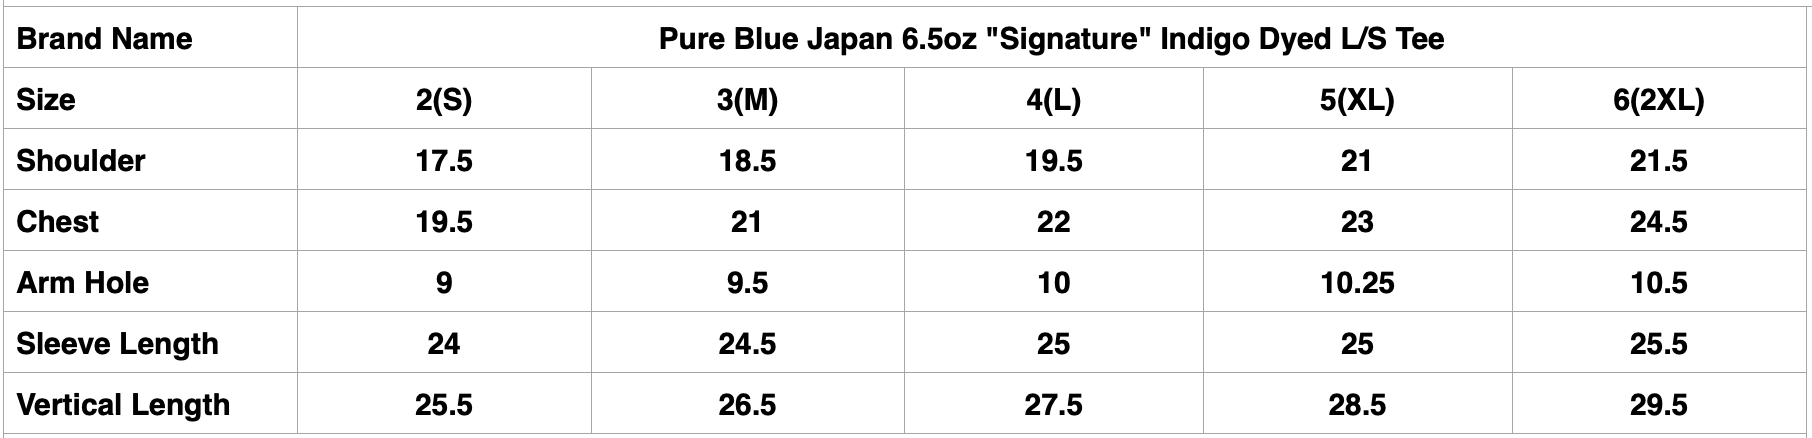 Pure Blue Japan 6.5oz "Signature" Indigo Dyed L/S Tee (Grand Indigo)